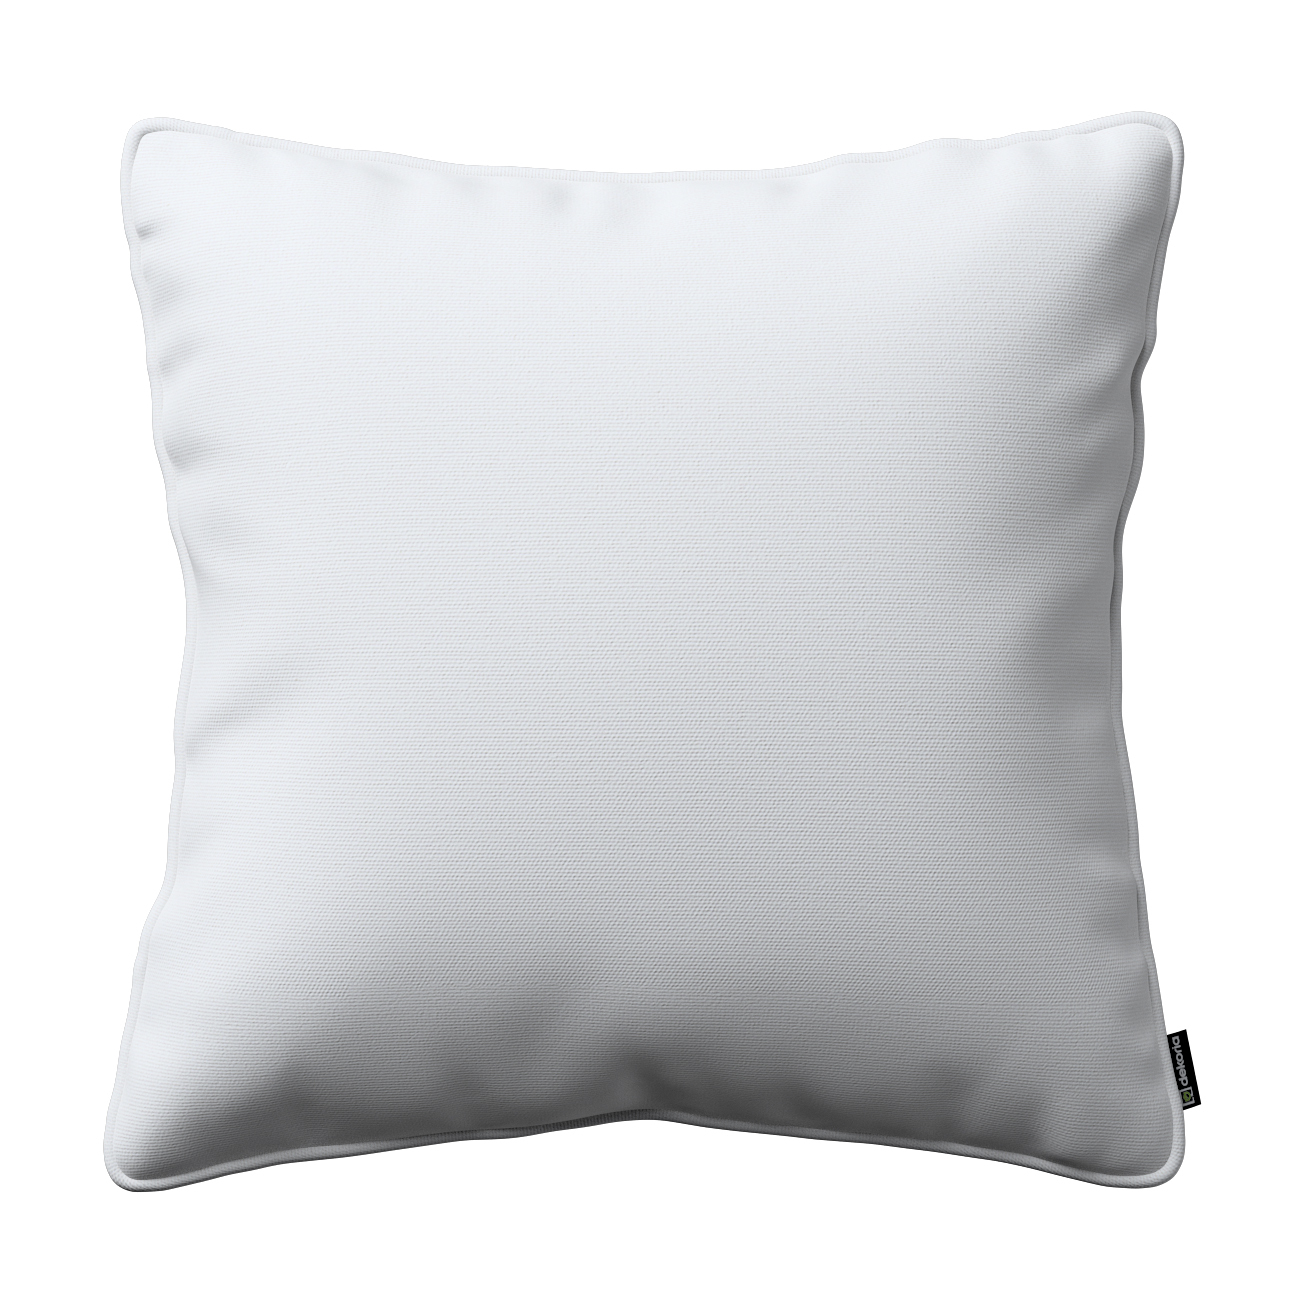 Kissenhülle Gabi mit Paspel, weiß, 60 x 60 cm, Loneta (133-02) günstig online kaufen